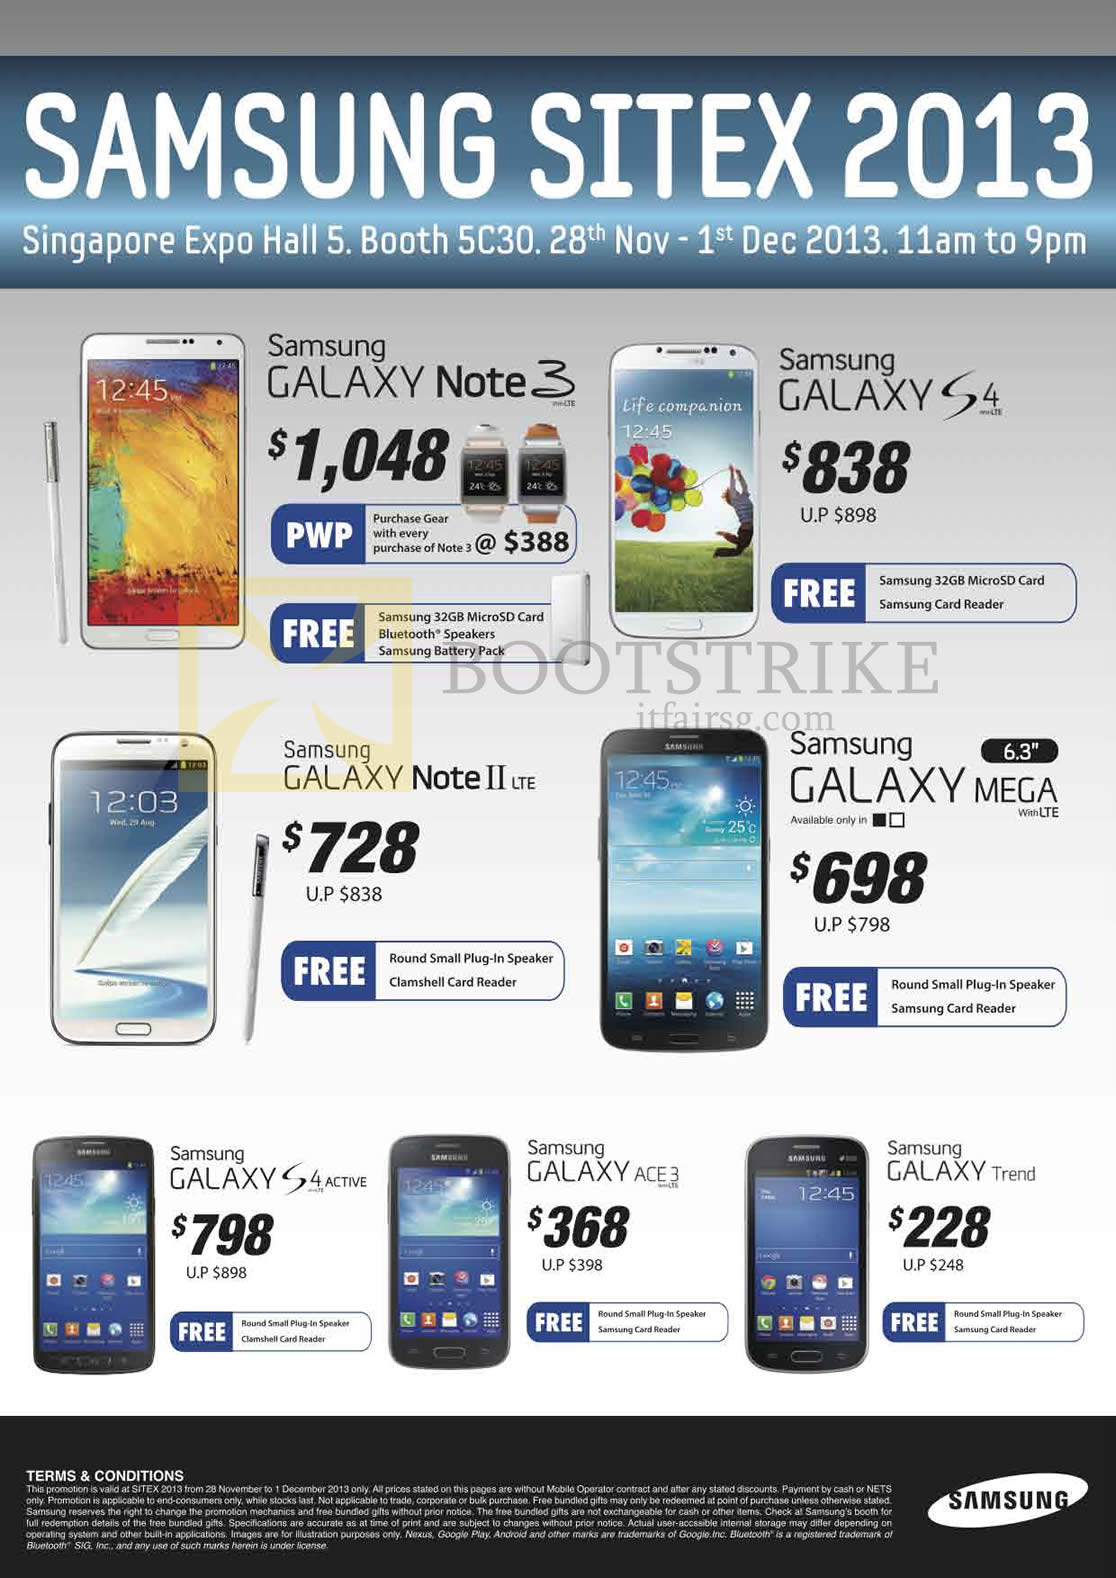 SITEX 2013 price list image brochure of Samsung Smartphones Galaxy Note 3, S4, Note II LTE, Mega 6.3, S4 Active, Ace 3, Trend